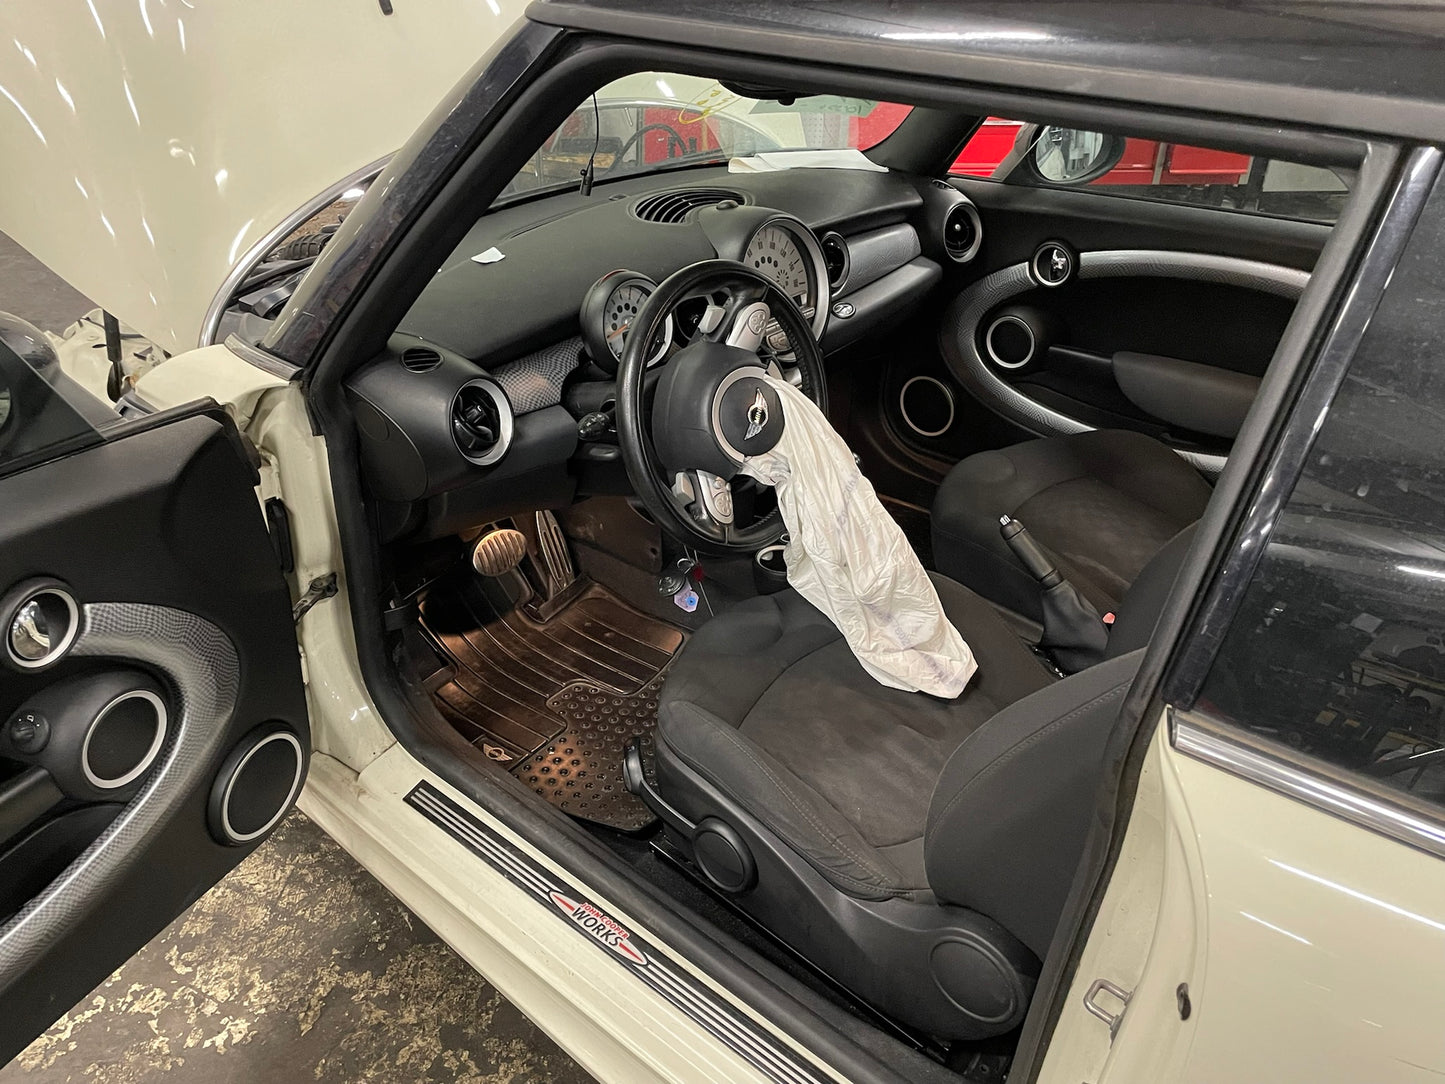 2010 MINI Cooper Hatchback S, New Parts Car (January 2022) Stk # 275